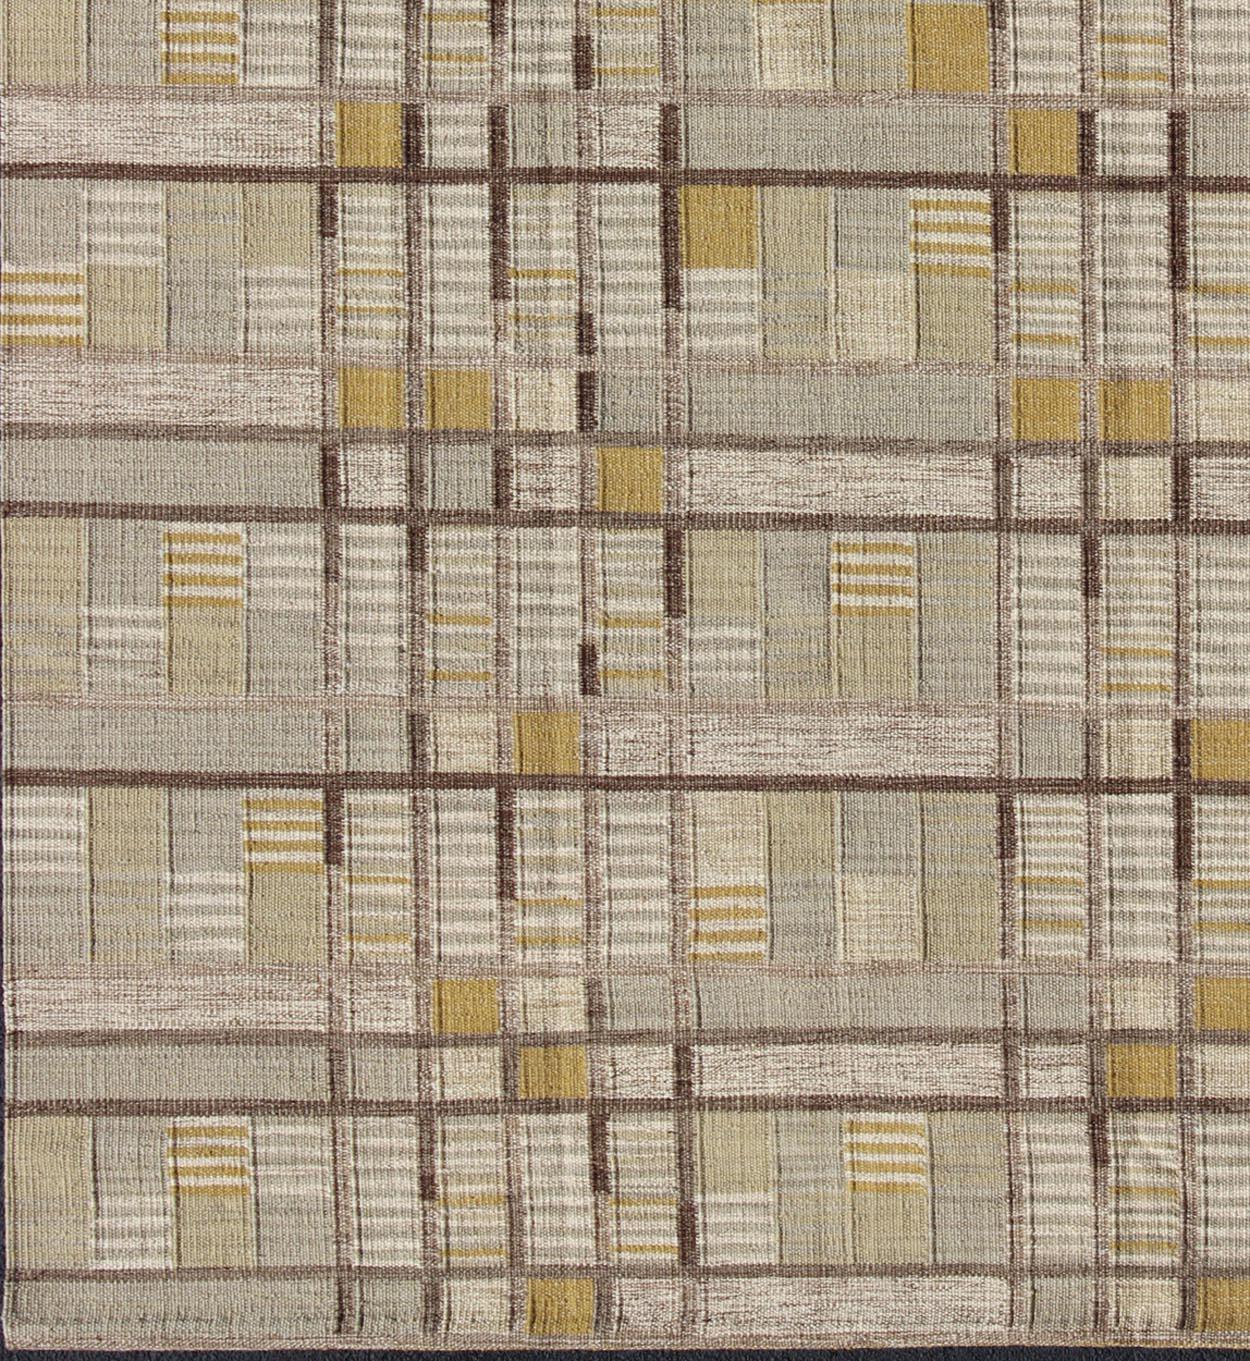 Scandinavian flat-weave rug with neutral color stripe design, rug rjk-16218-shb-086-01, country of origin / type: Scandinavia / Scandinavian Modern.

This modern Scandinavian design flat-weave rug is inspired by the work of Swedish textile designers